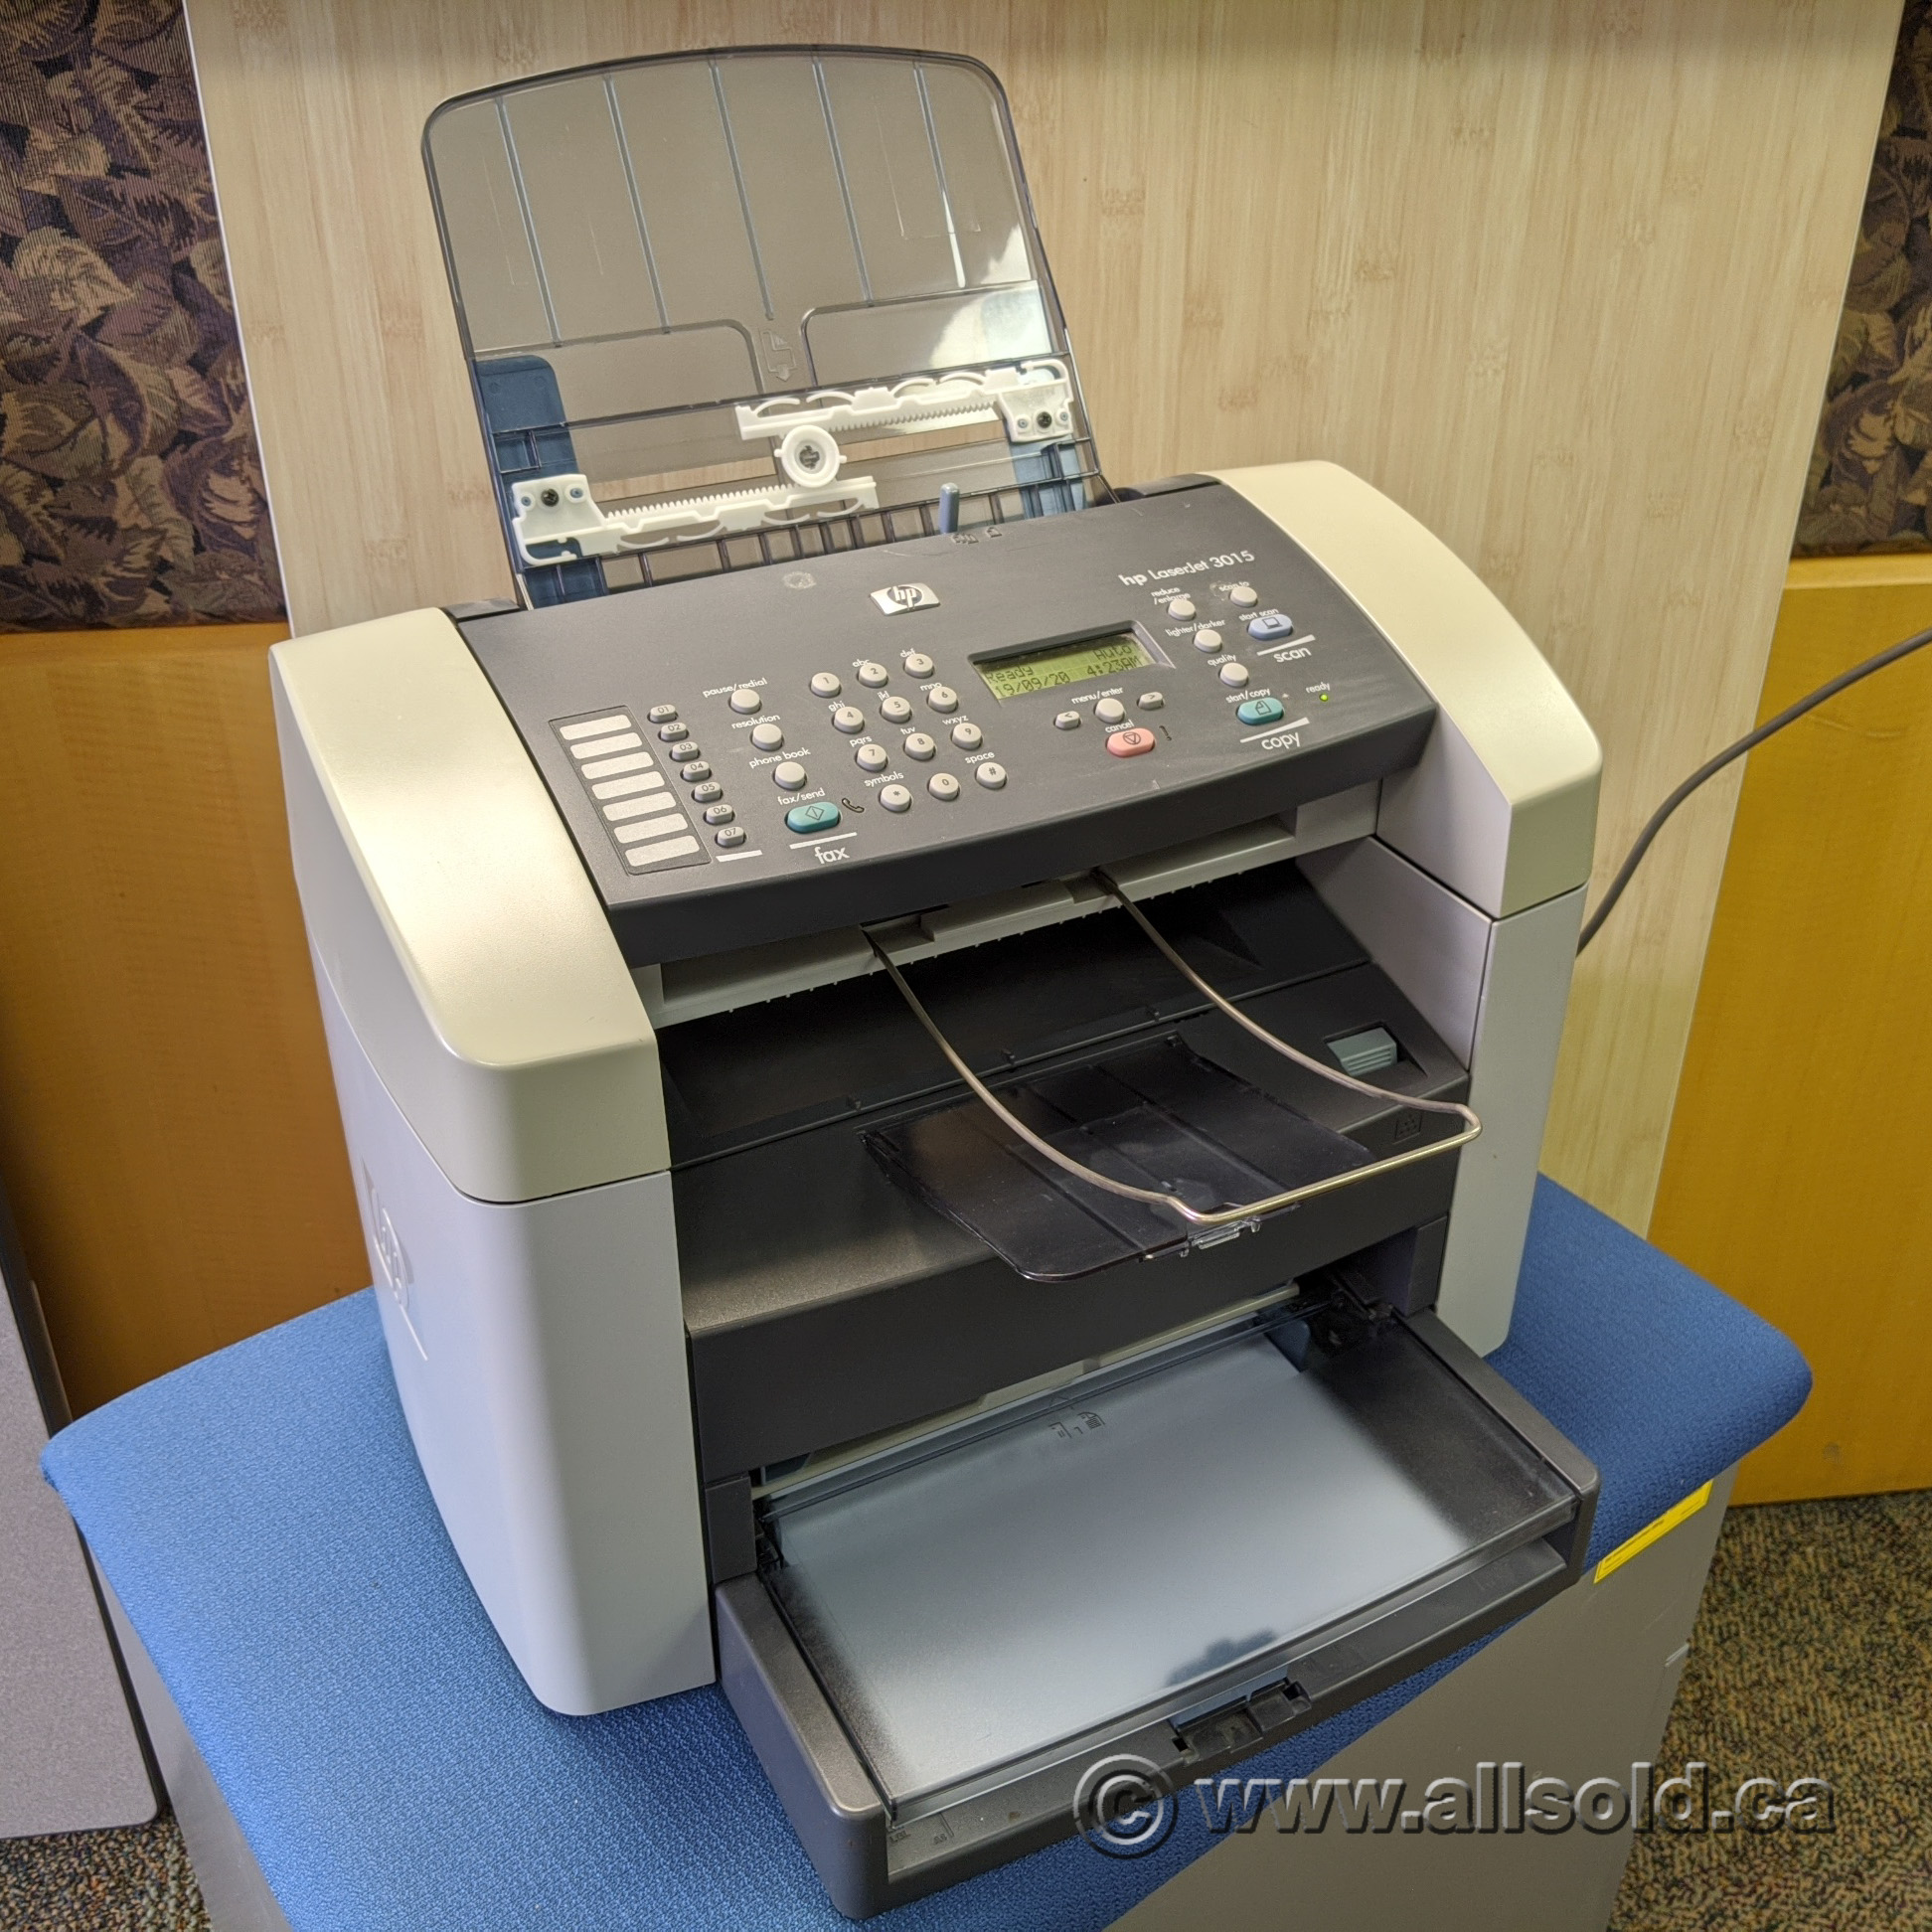 HP Printer Scanner Copy Black/White - Allsold.ca - Buy & Sell Used Office Calgary